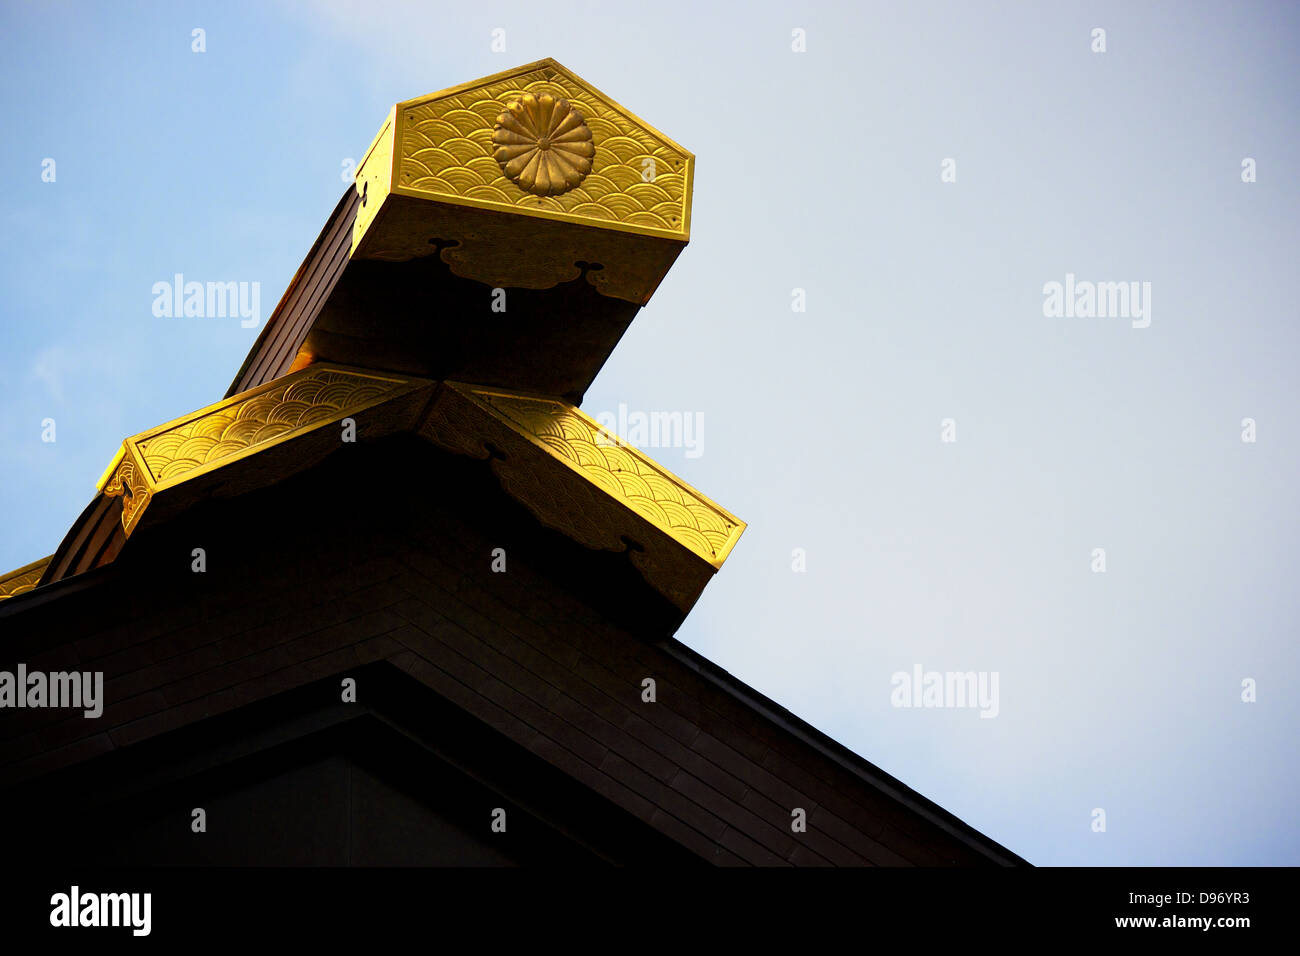 Roof of Meiji Shrine Tokyo with golden ornate tip Stock Photo